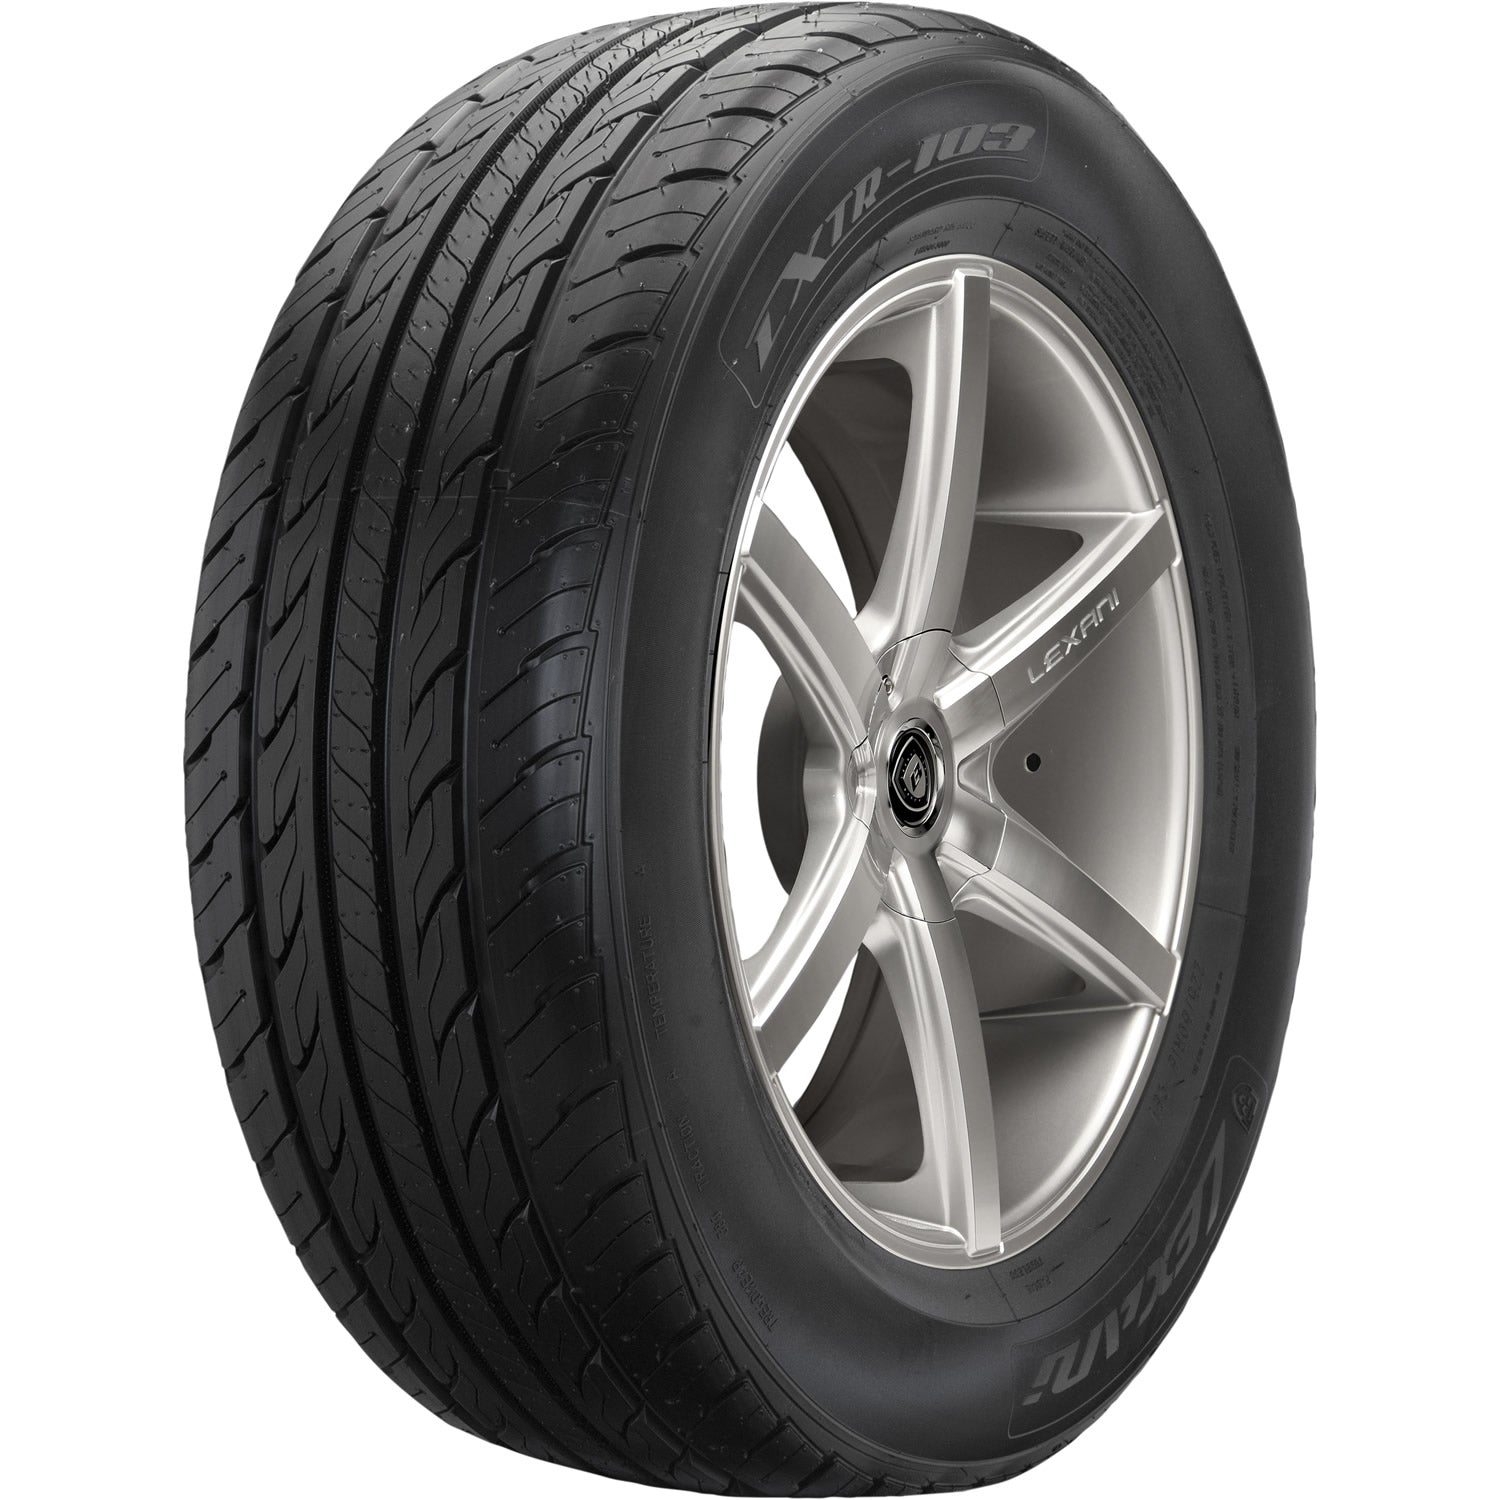 LEXANI LXTR-103 225/60R16 (26.6X9R 16) Tires